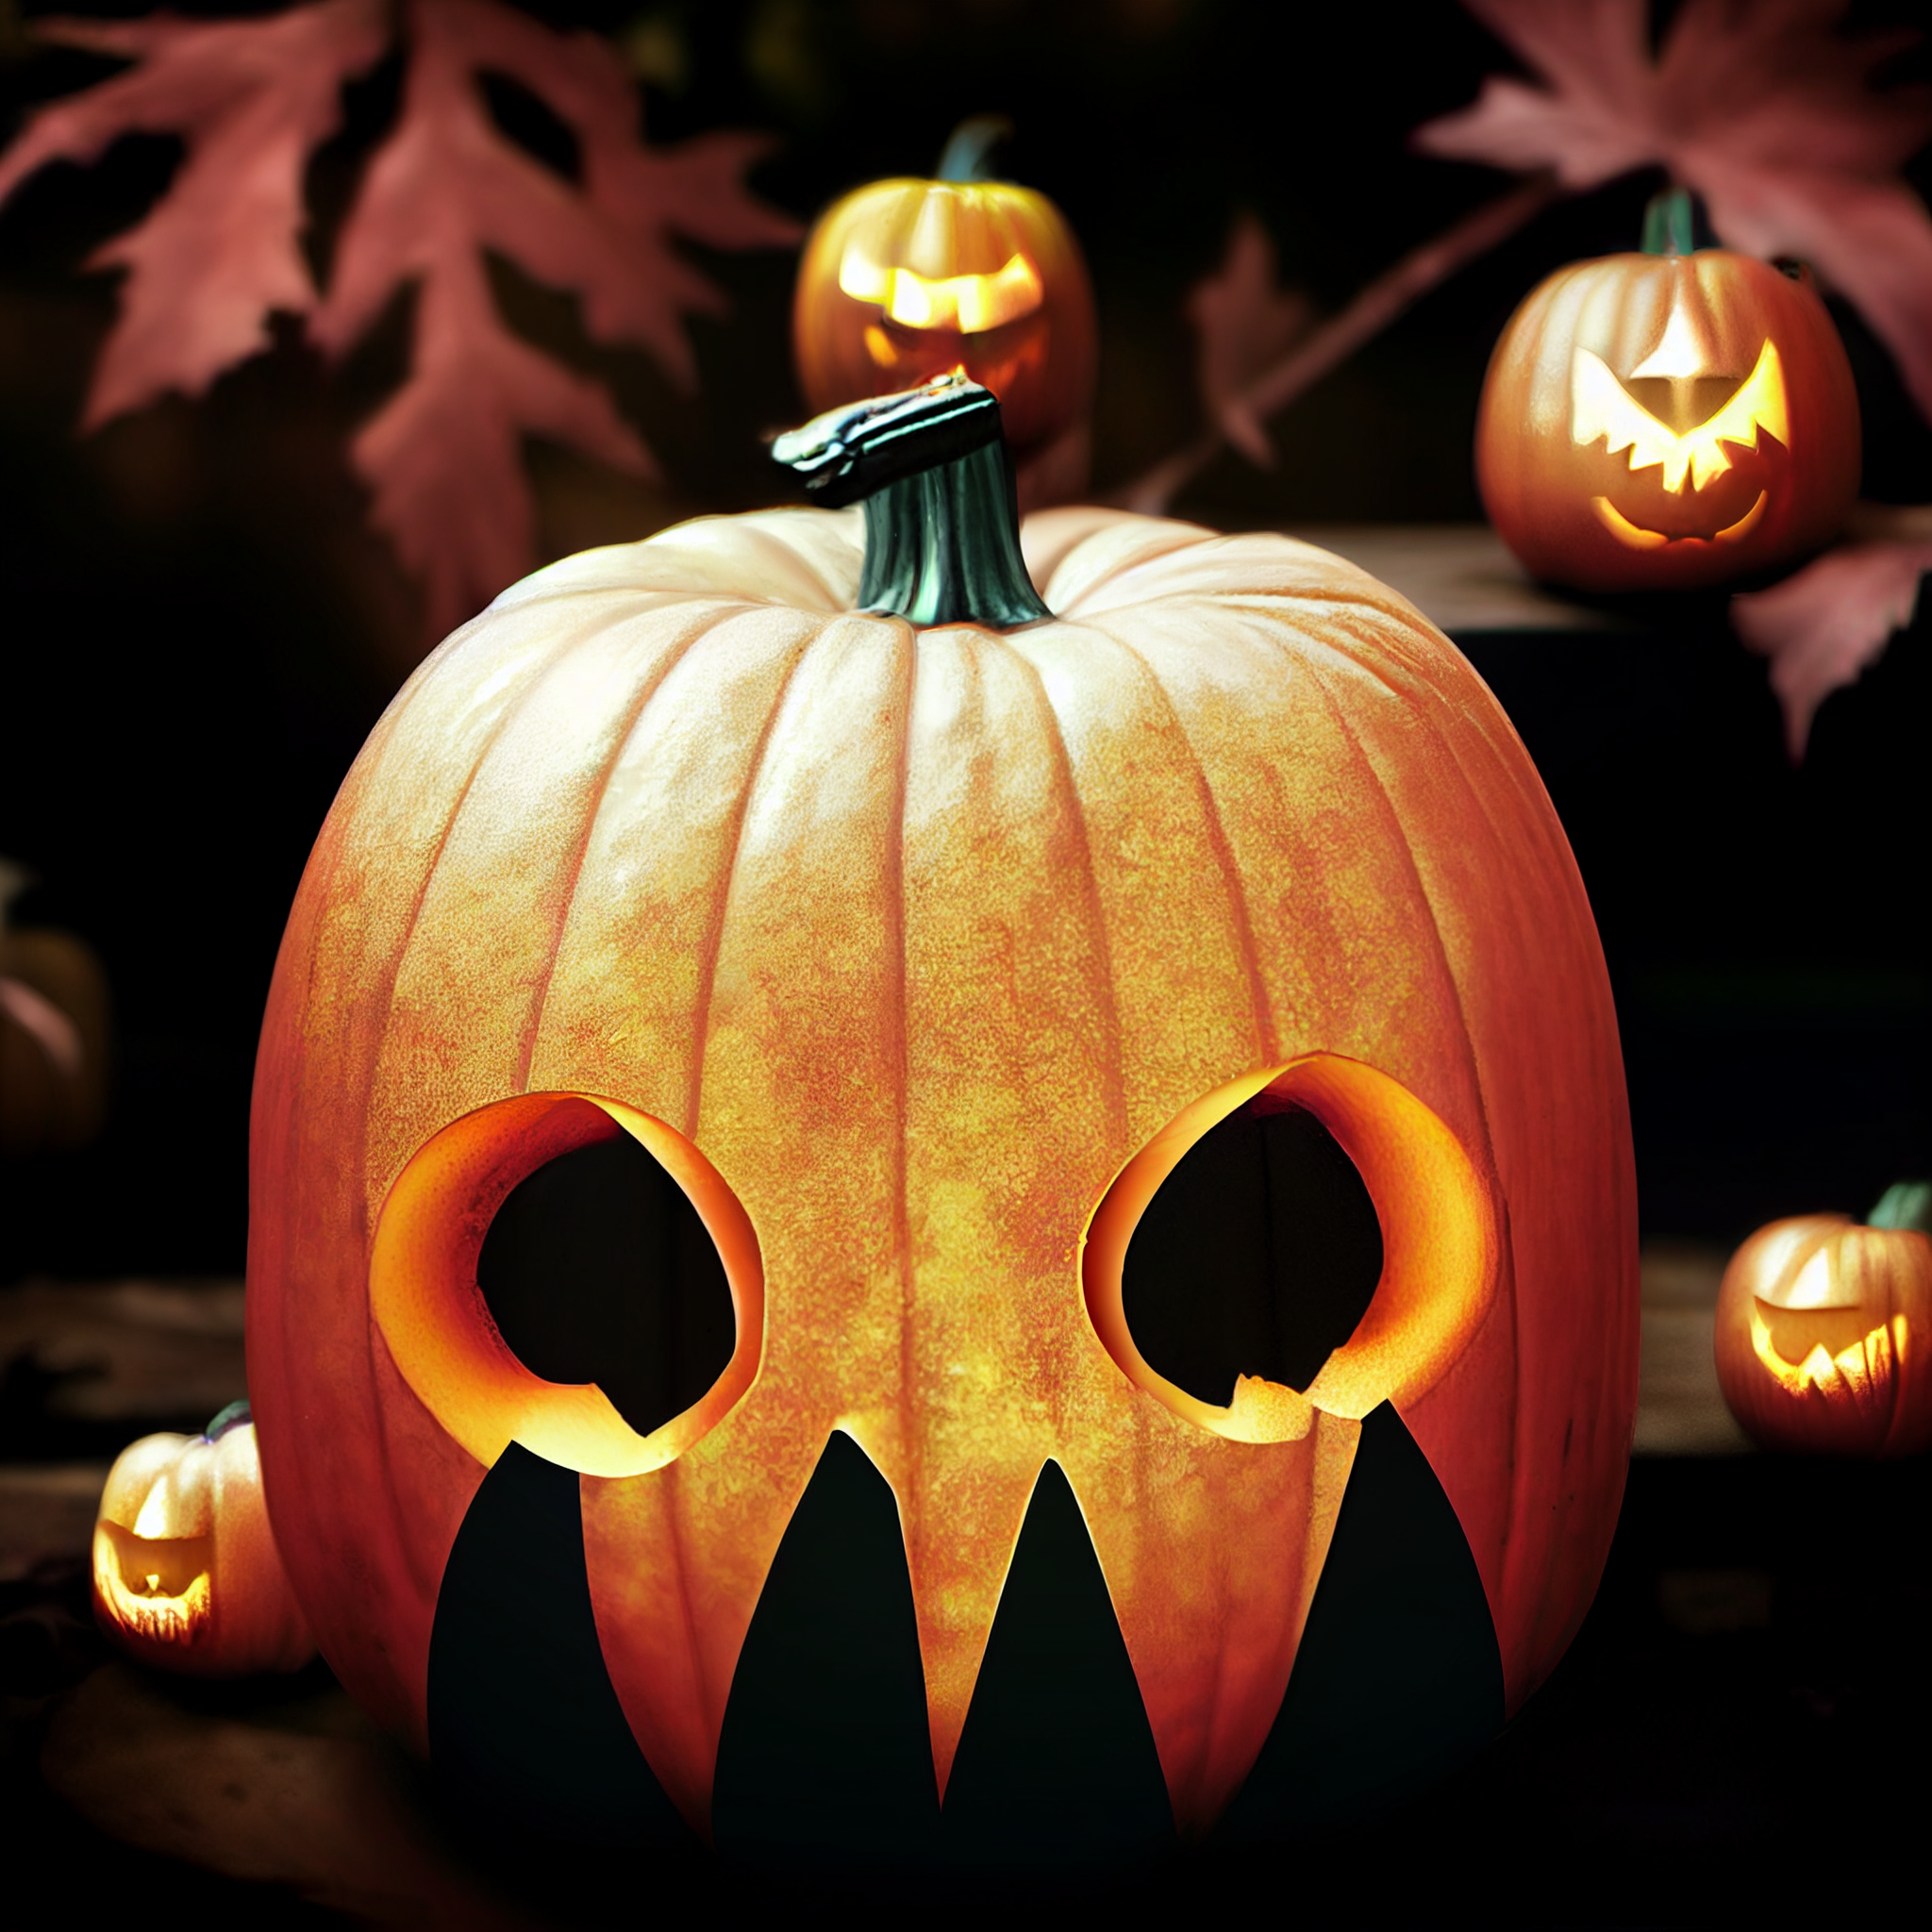 Halloween by AI main image image